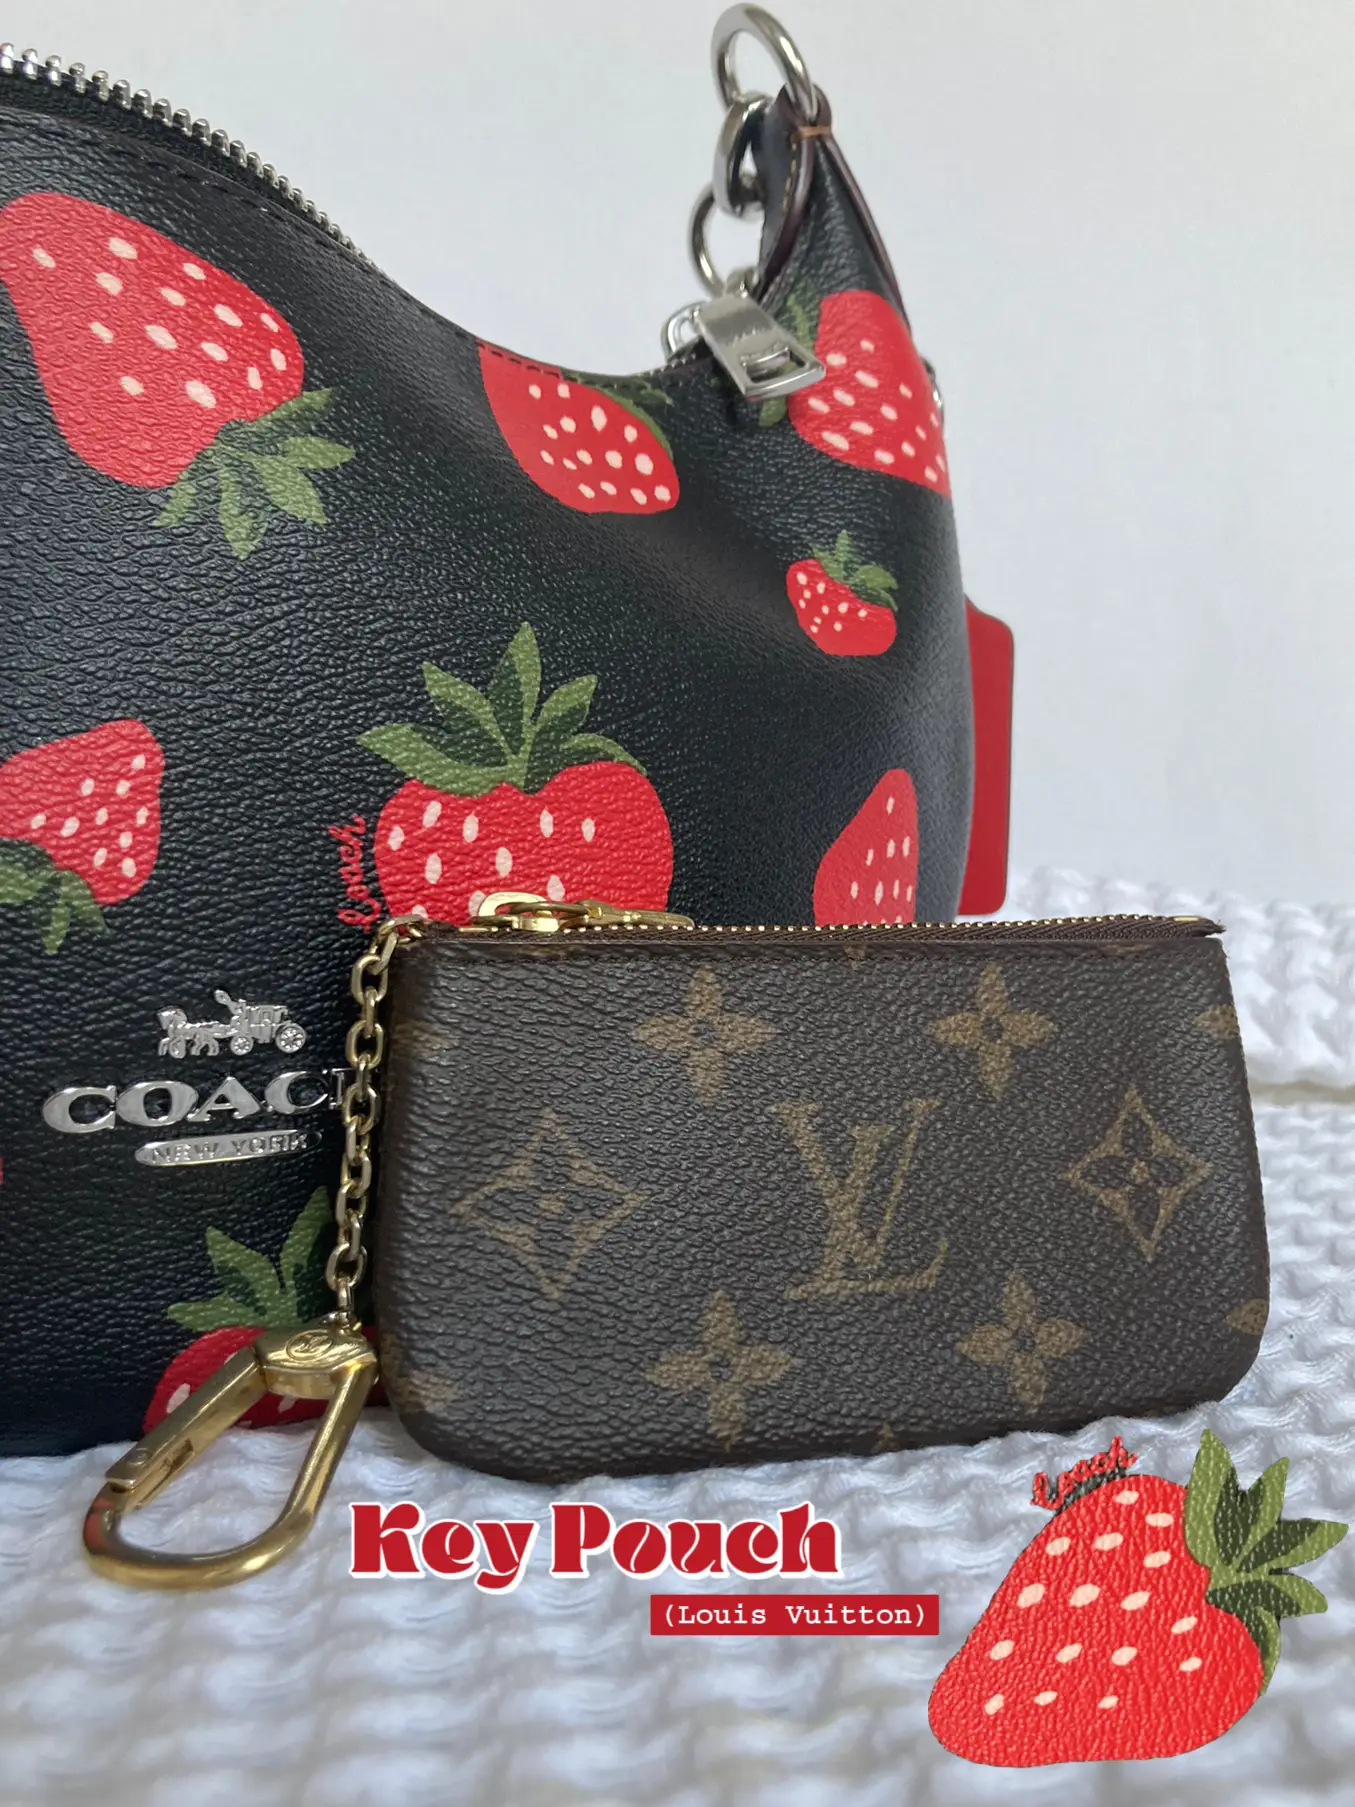 Pre-owned Nolita 15 Wristlet Mini Bag Strawberry Pink Pebble Leather